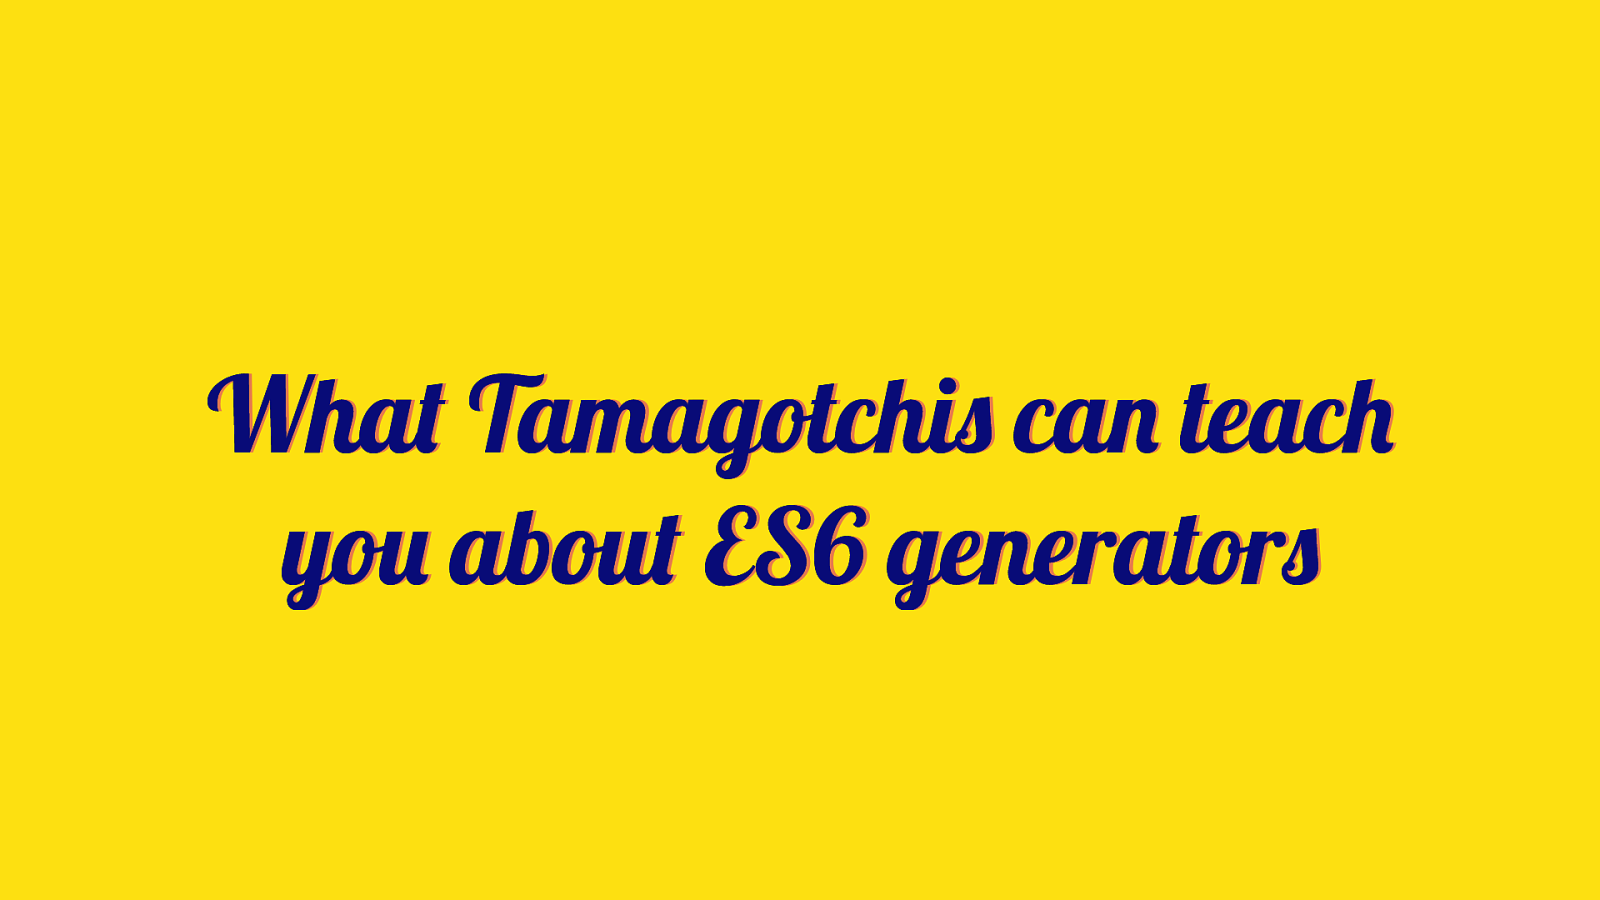 What Tamagotchis can teach you about ES6 generators